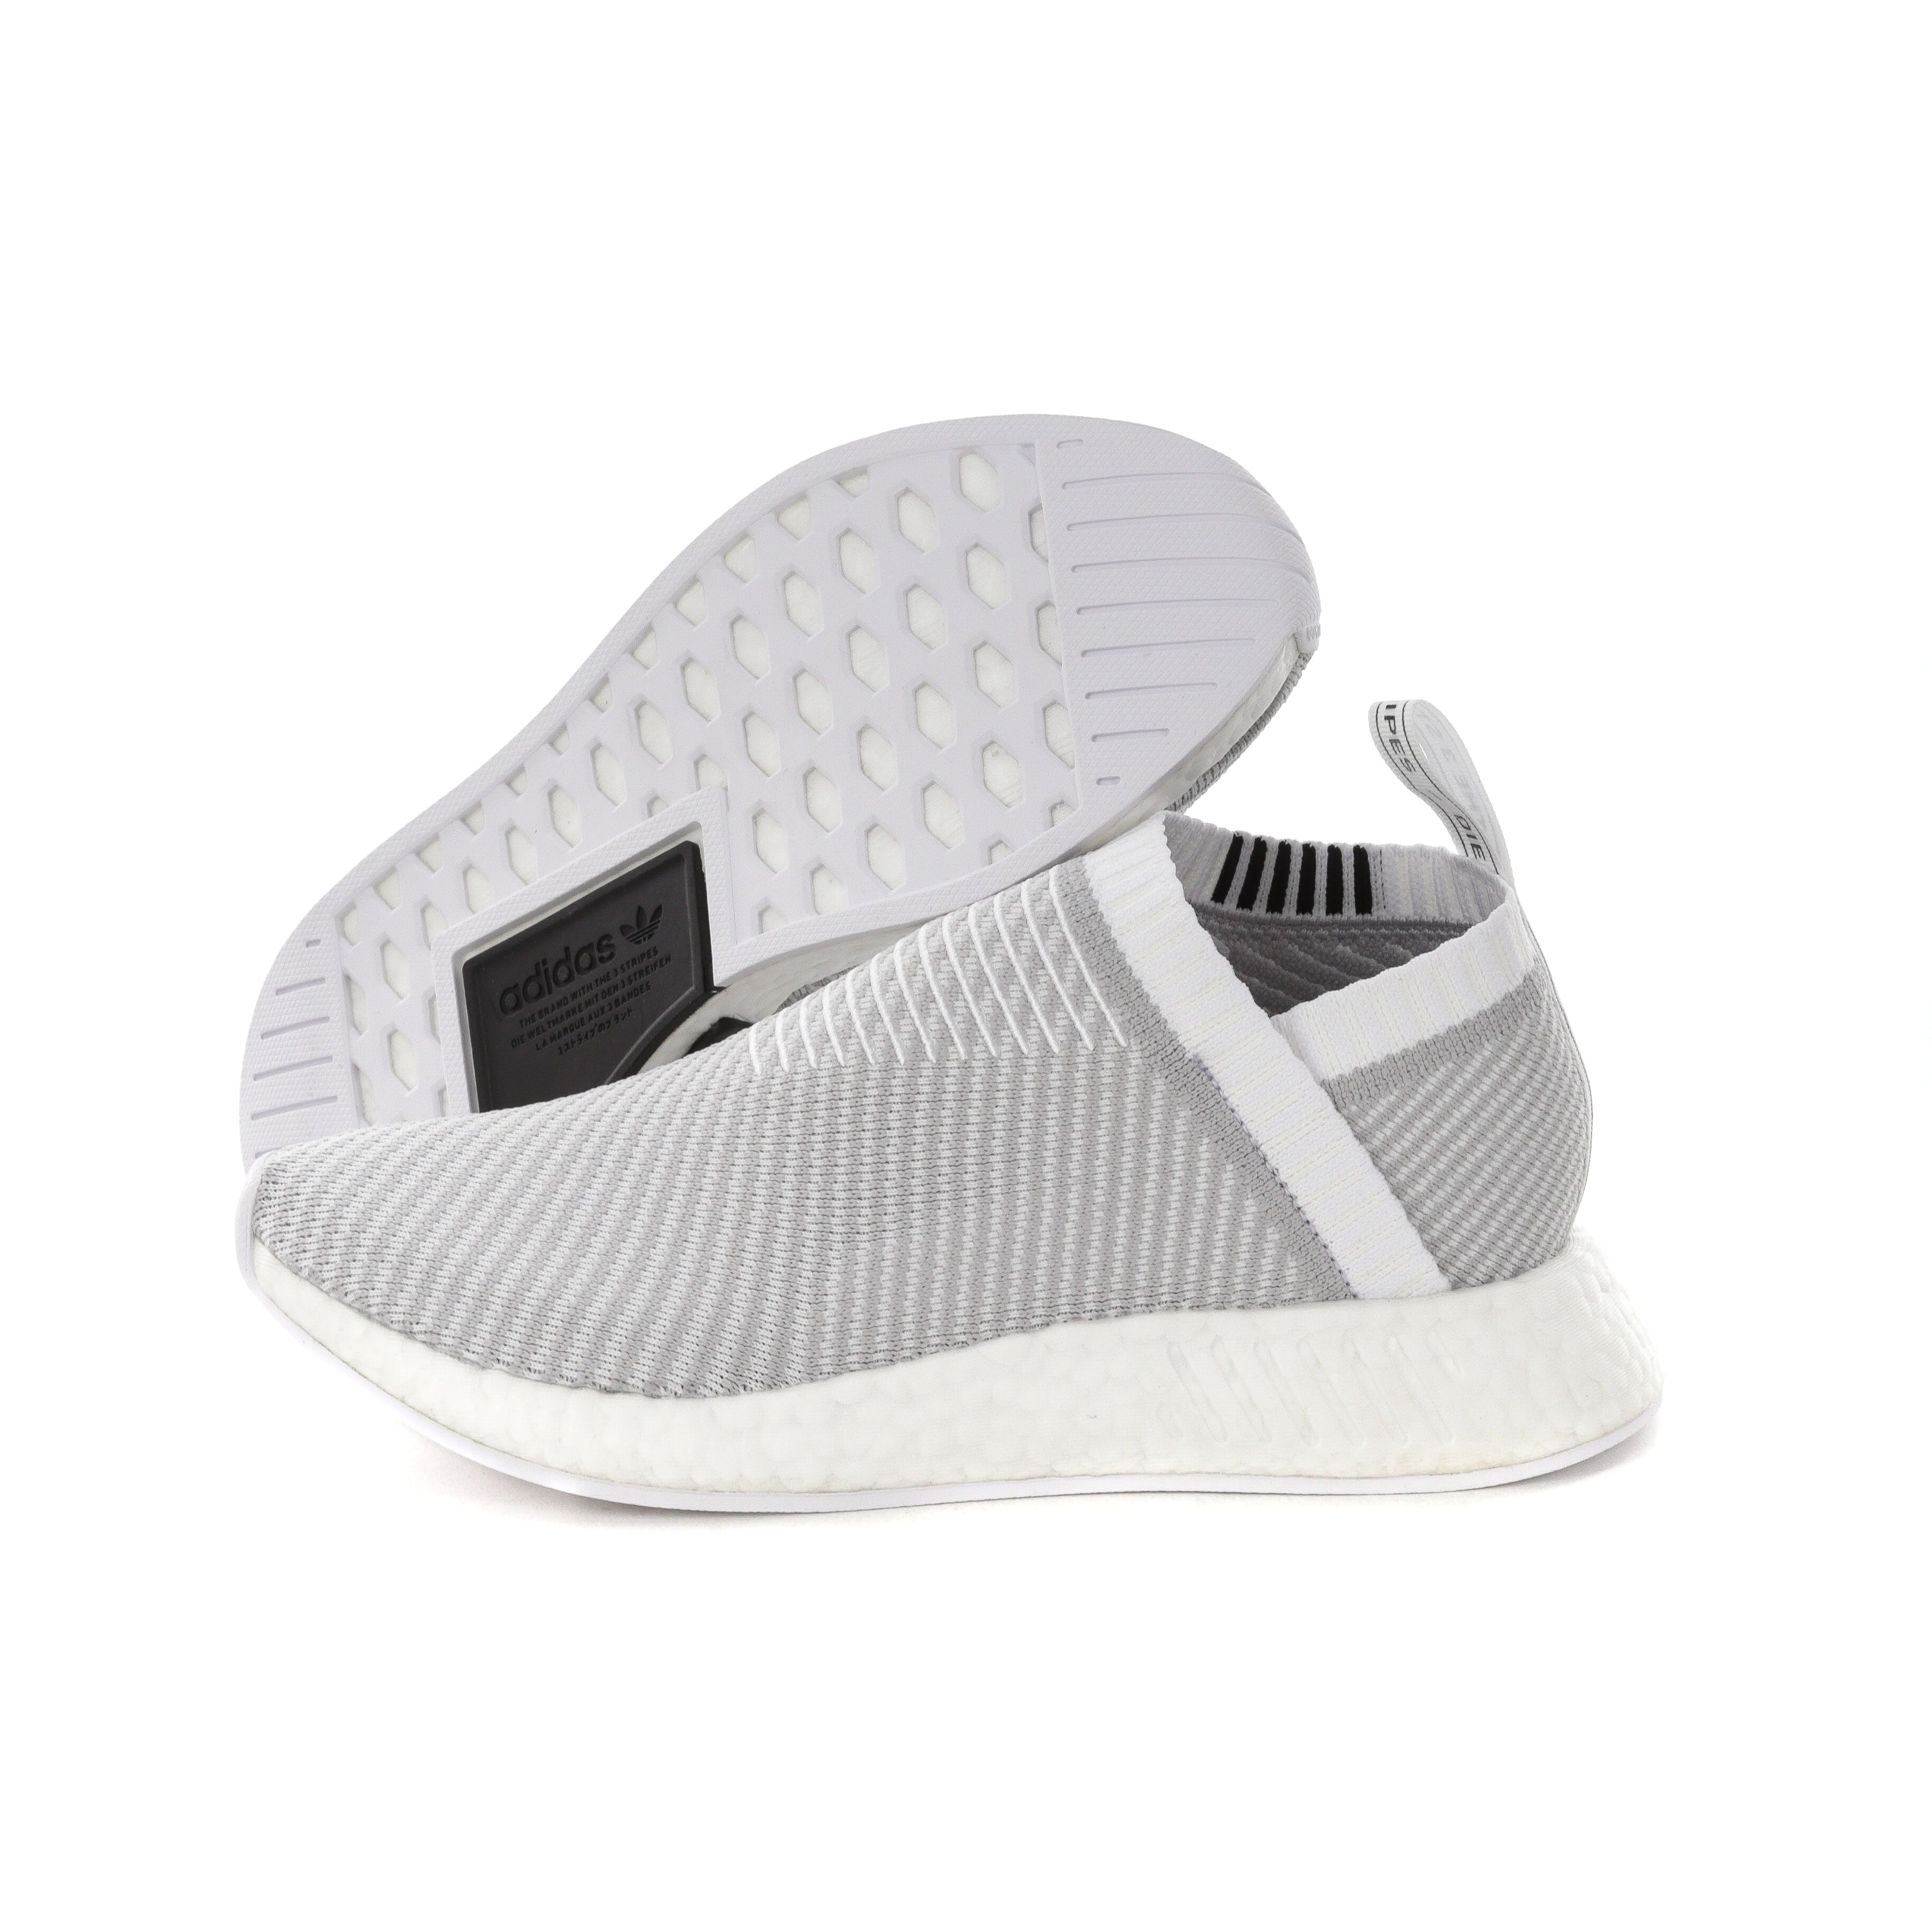 Adidas NMD CS2 Primeknit Grey/Whitem 